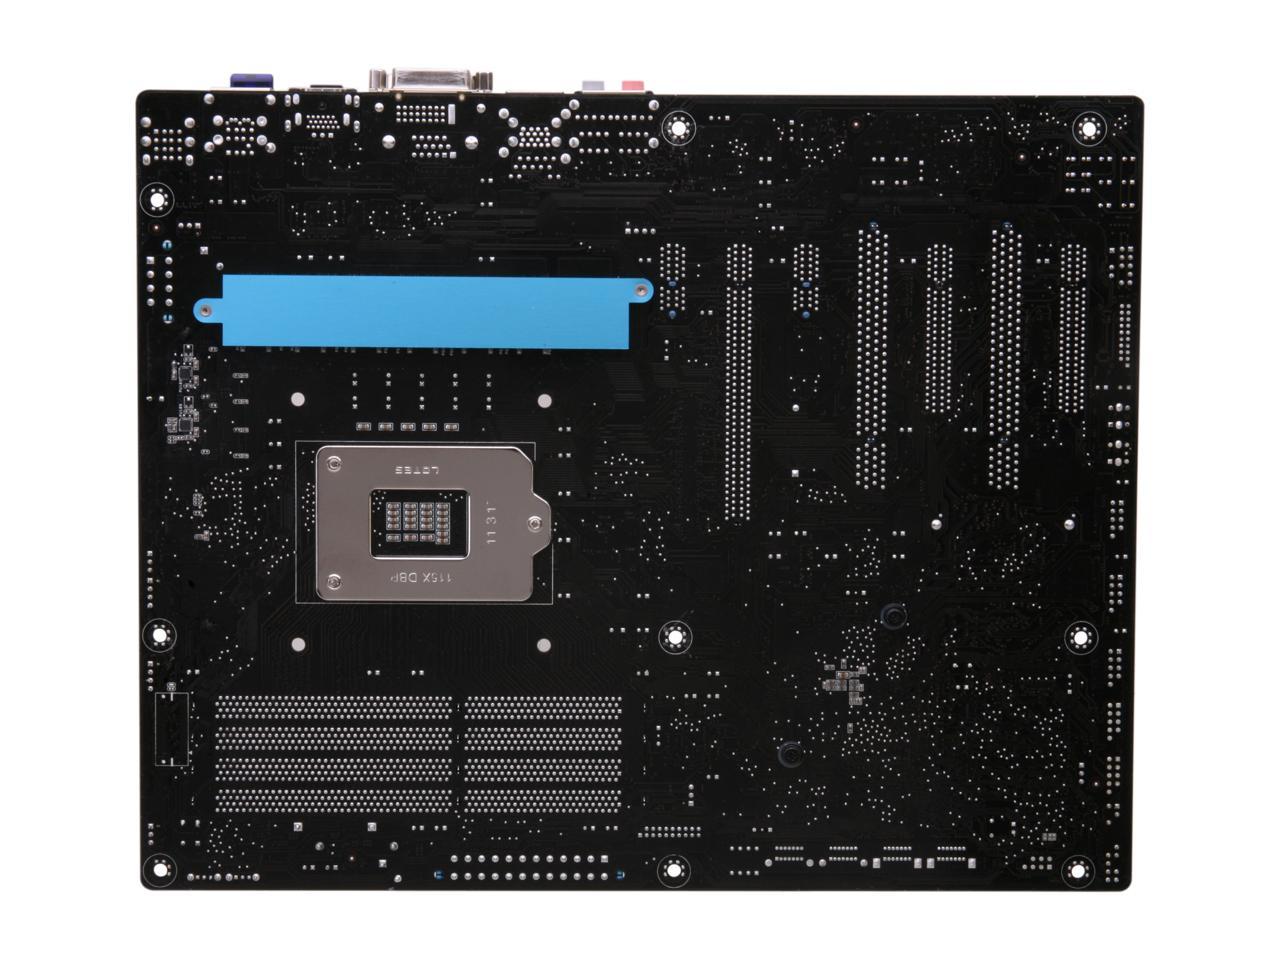 ASUS P8Z68-V/GEN3 LGA 1155 Intel Z68 HDMI SATA 6Gb/s USB 3.0 ATX Intel Motherboard with UEFI BIOS